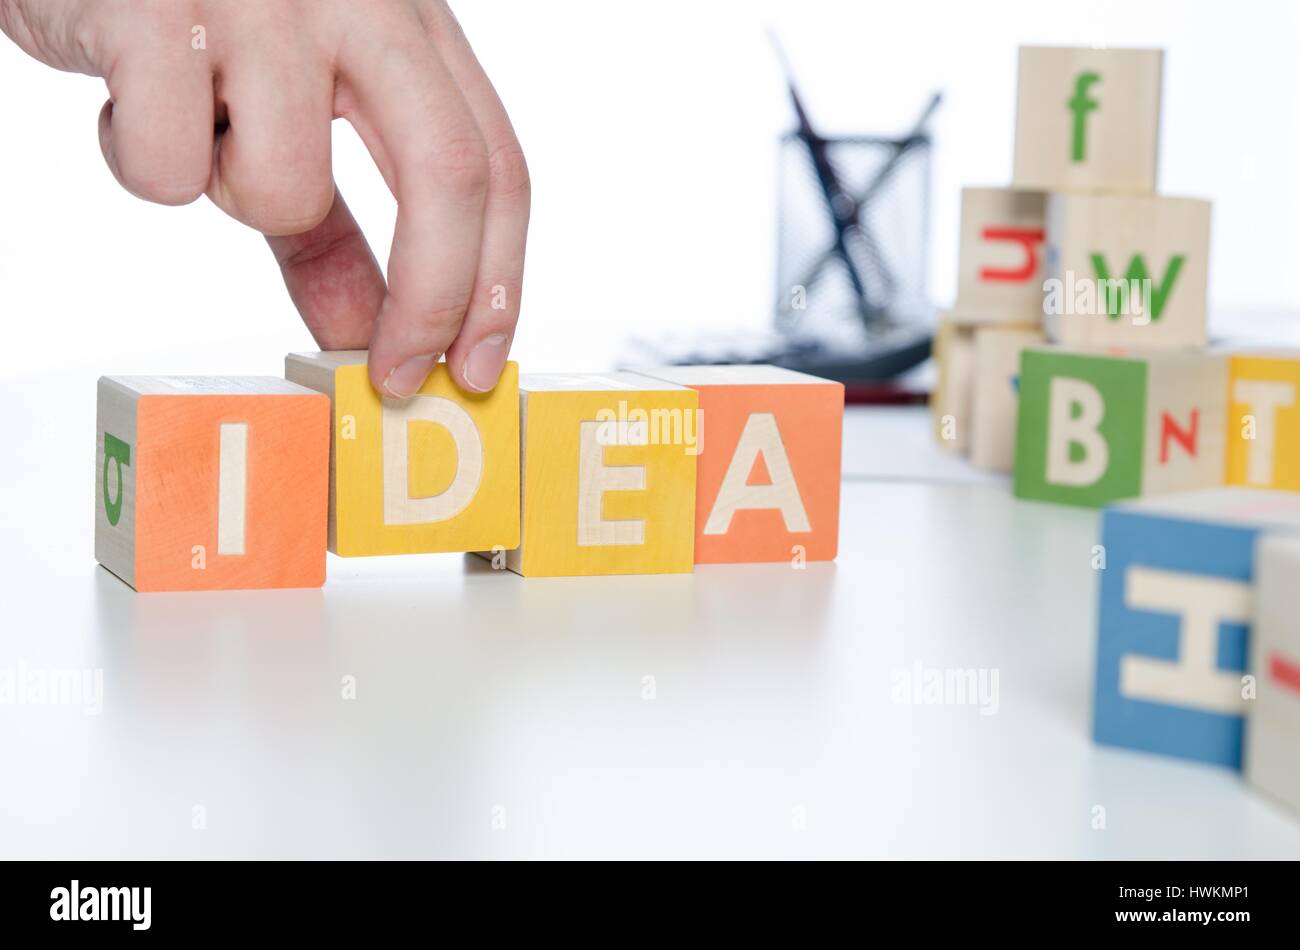 Idee-Wort mit bunten Blöcken. Idee Innovation Konzept Block Alphabet Plan Hand Geschäftskonzept Stockfoto